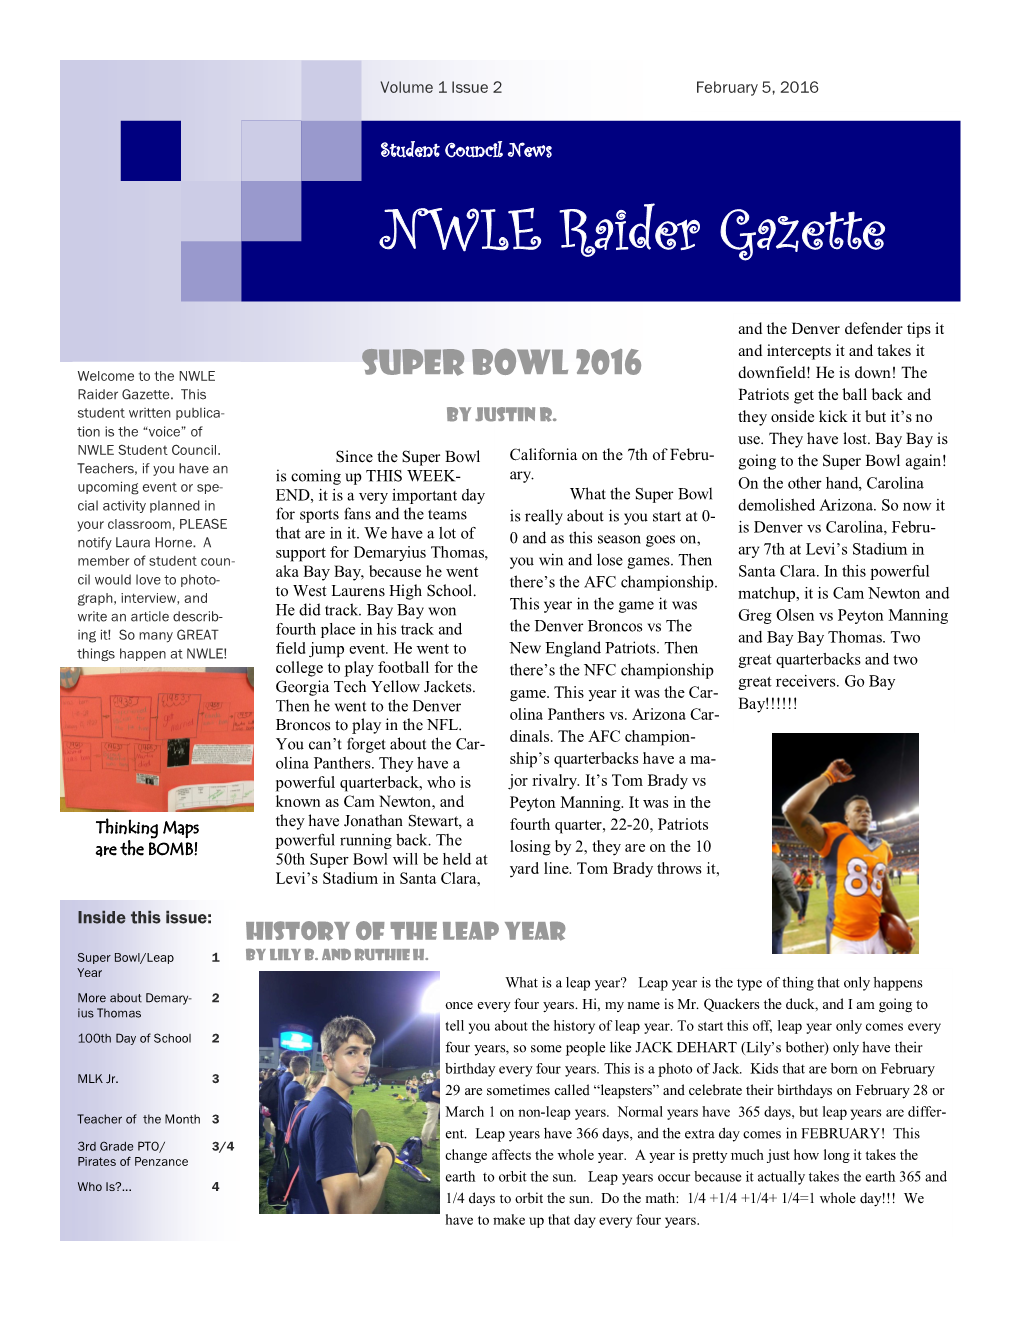 NWLE Raider Gazette